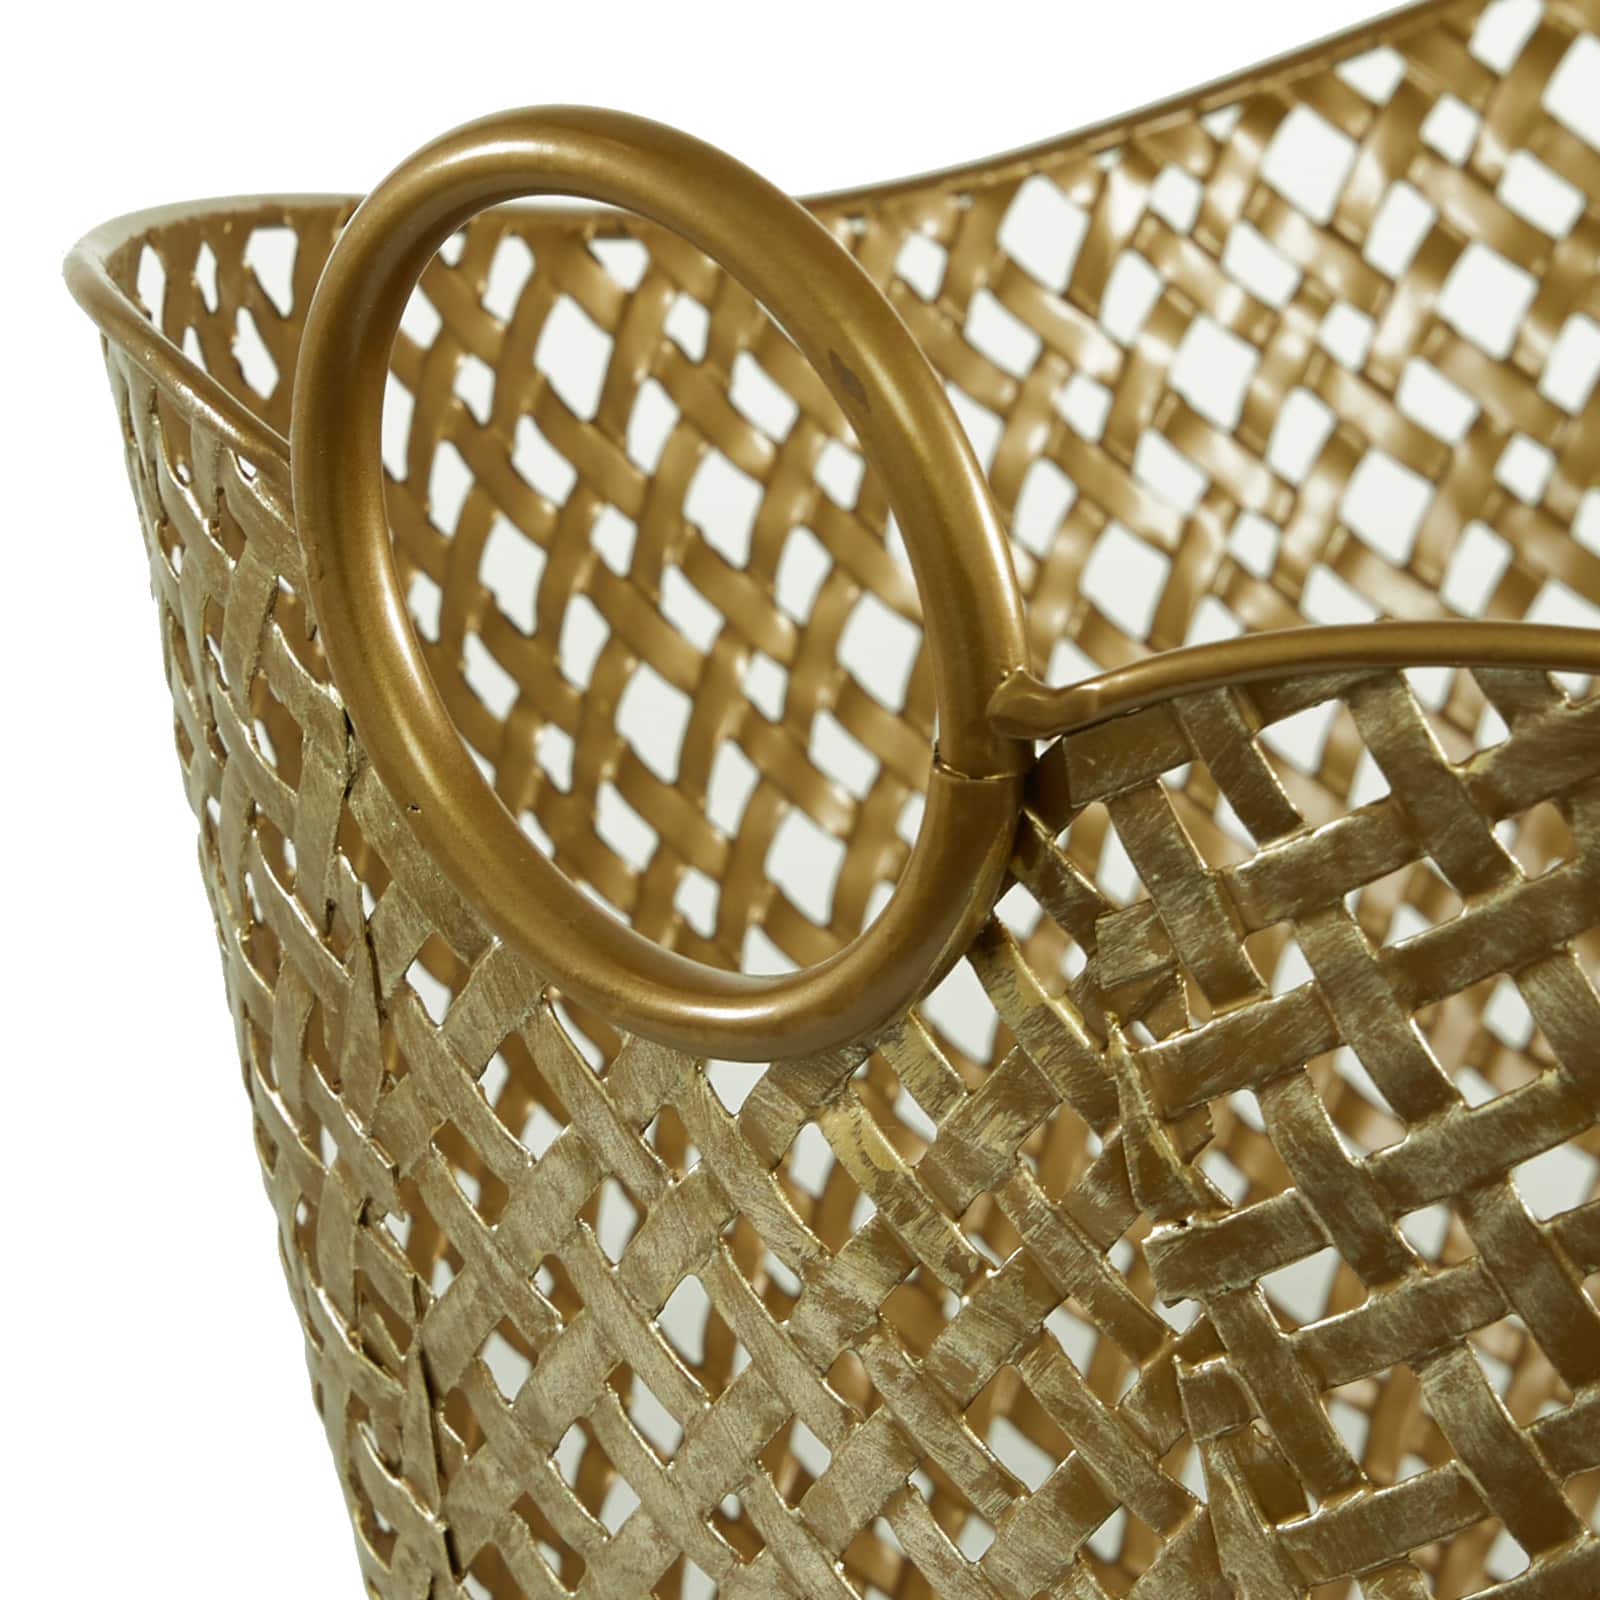 Gold Metal Contemporary Storage Basket